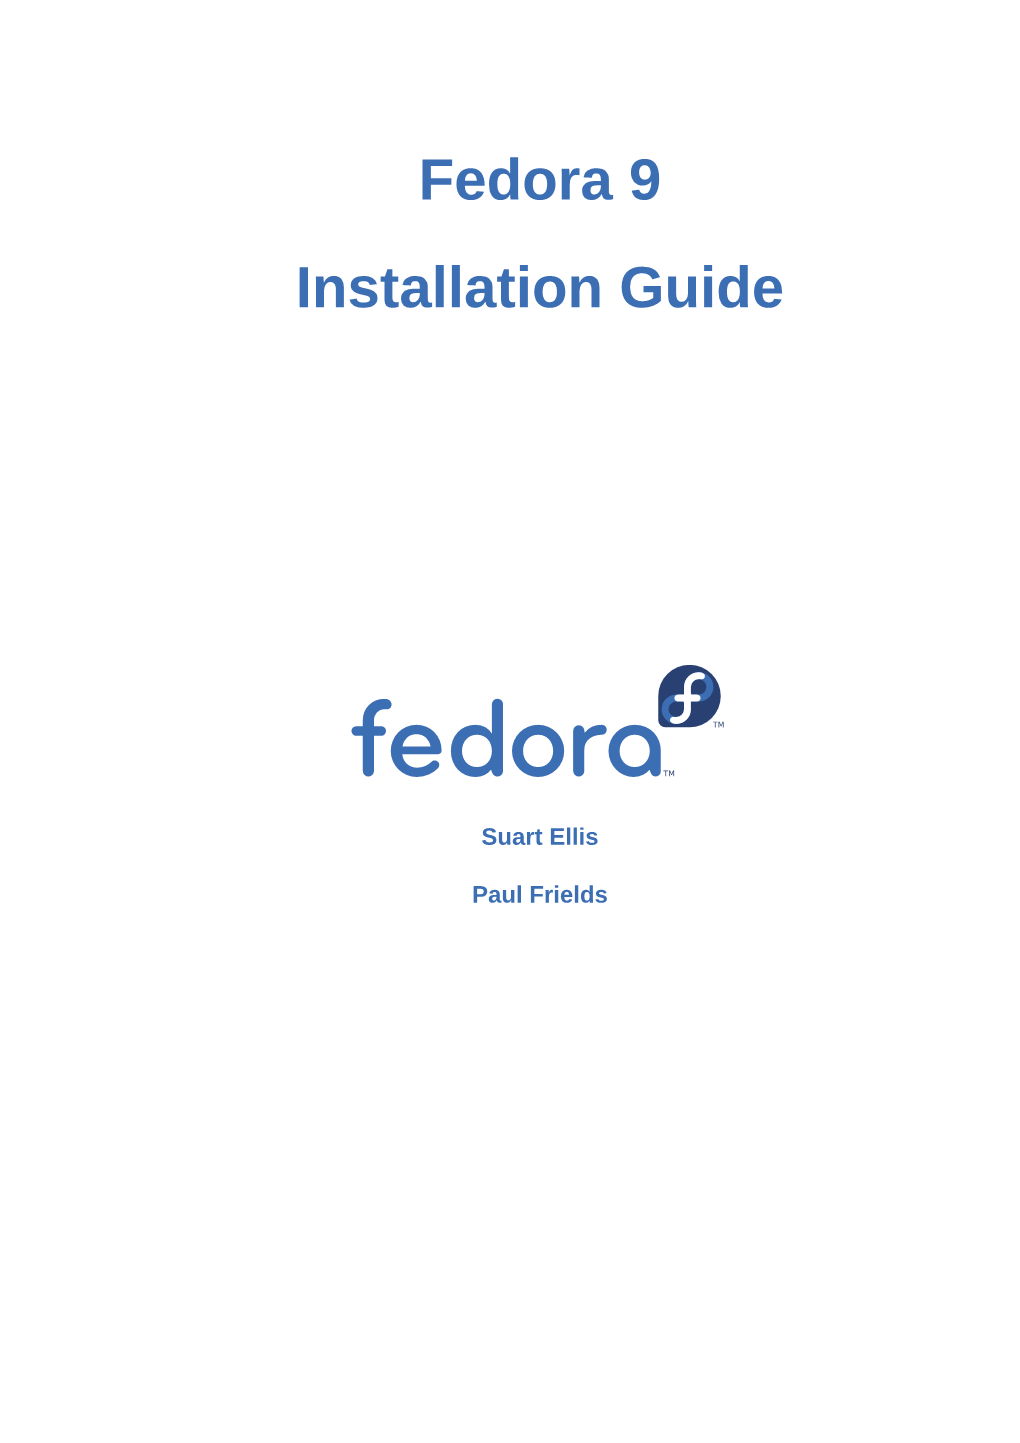 Fedora 9 Installation Guide